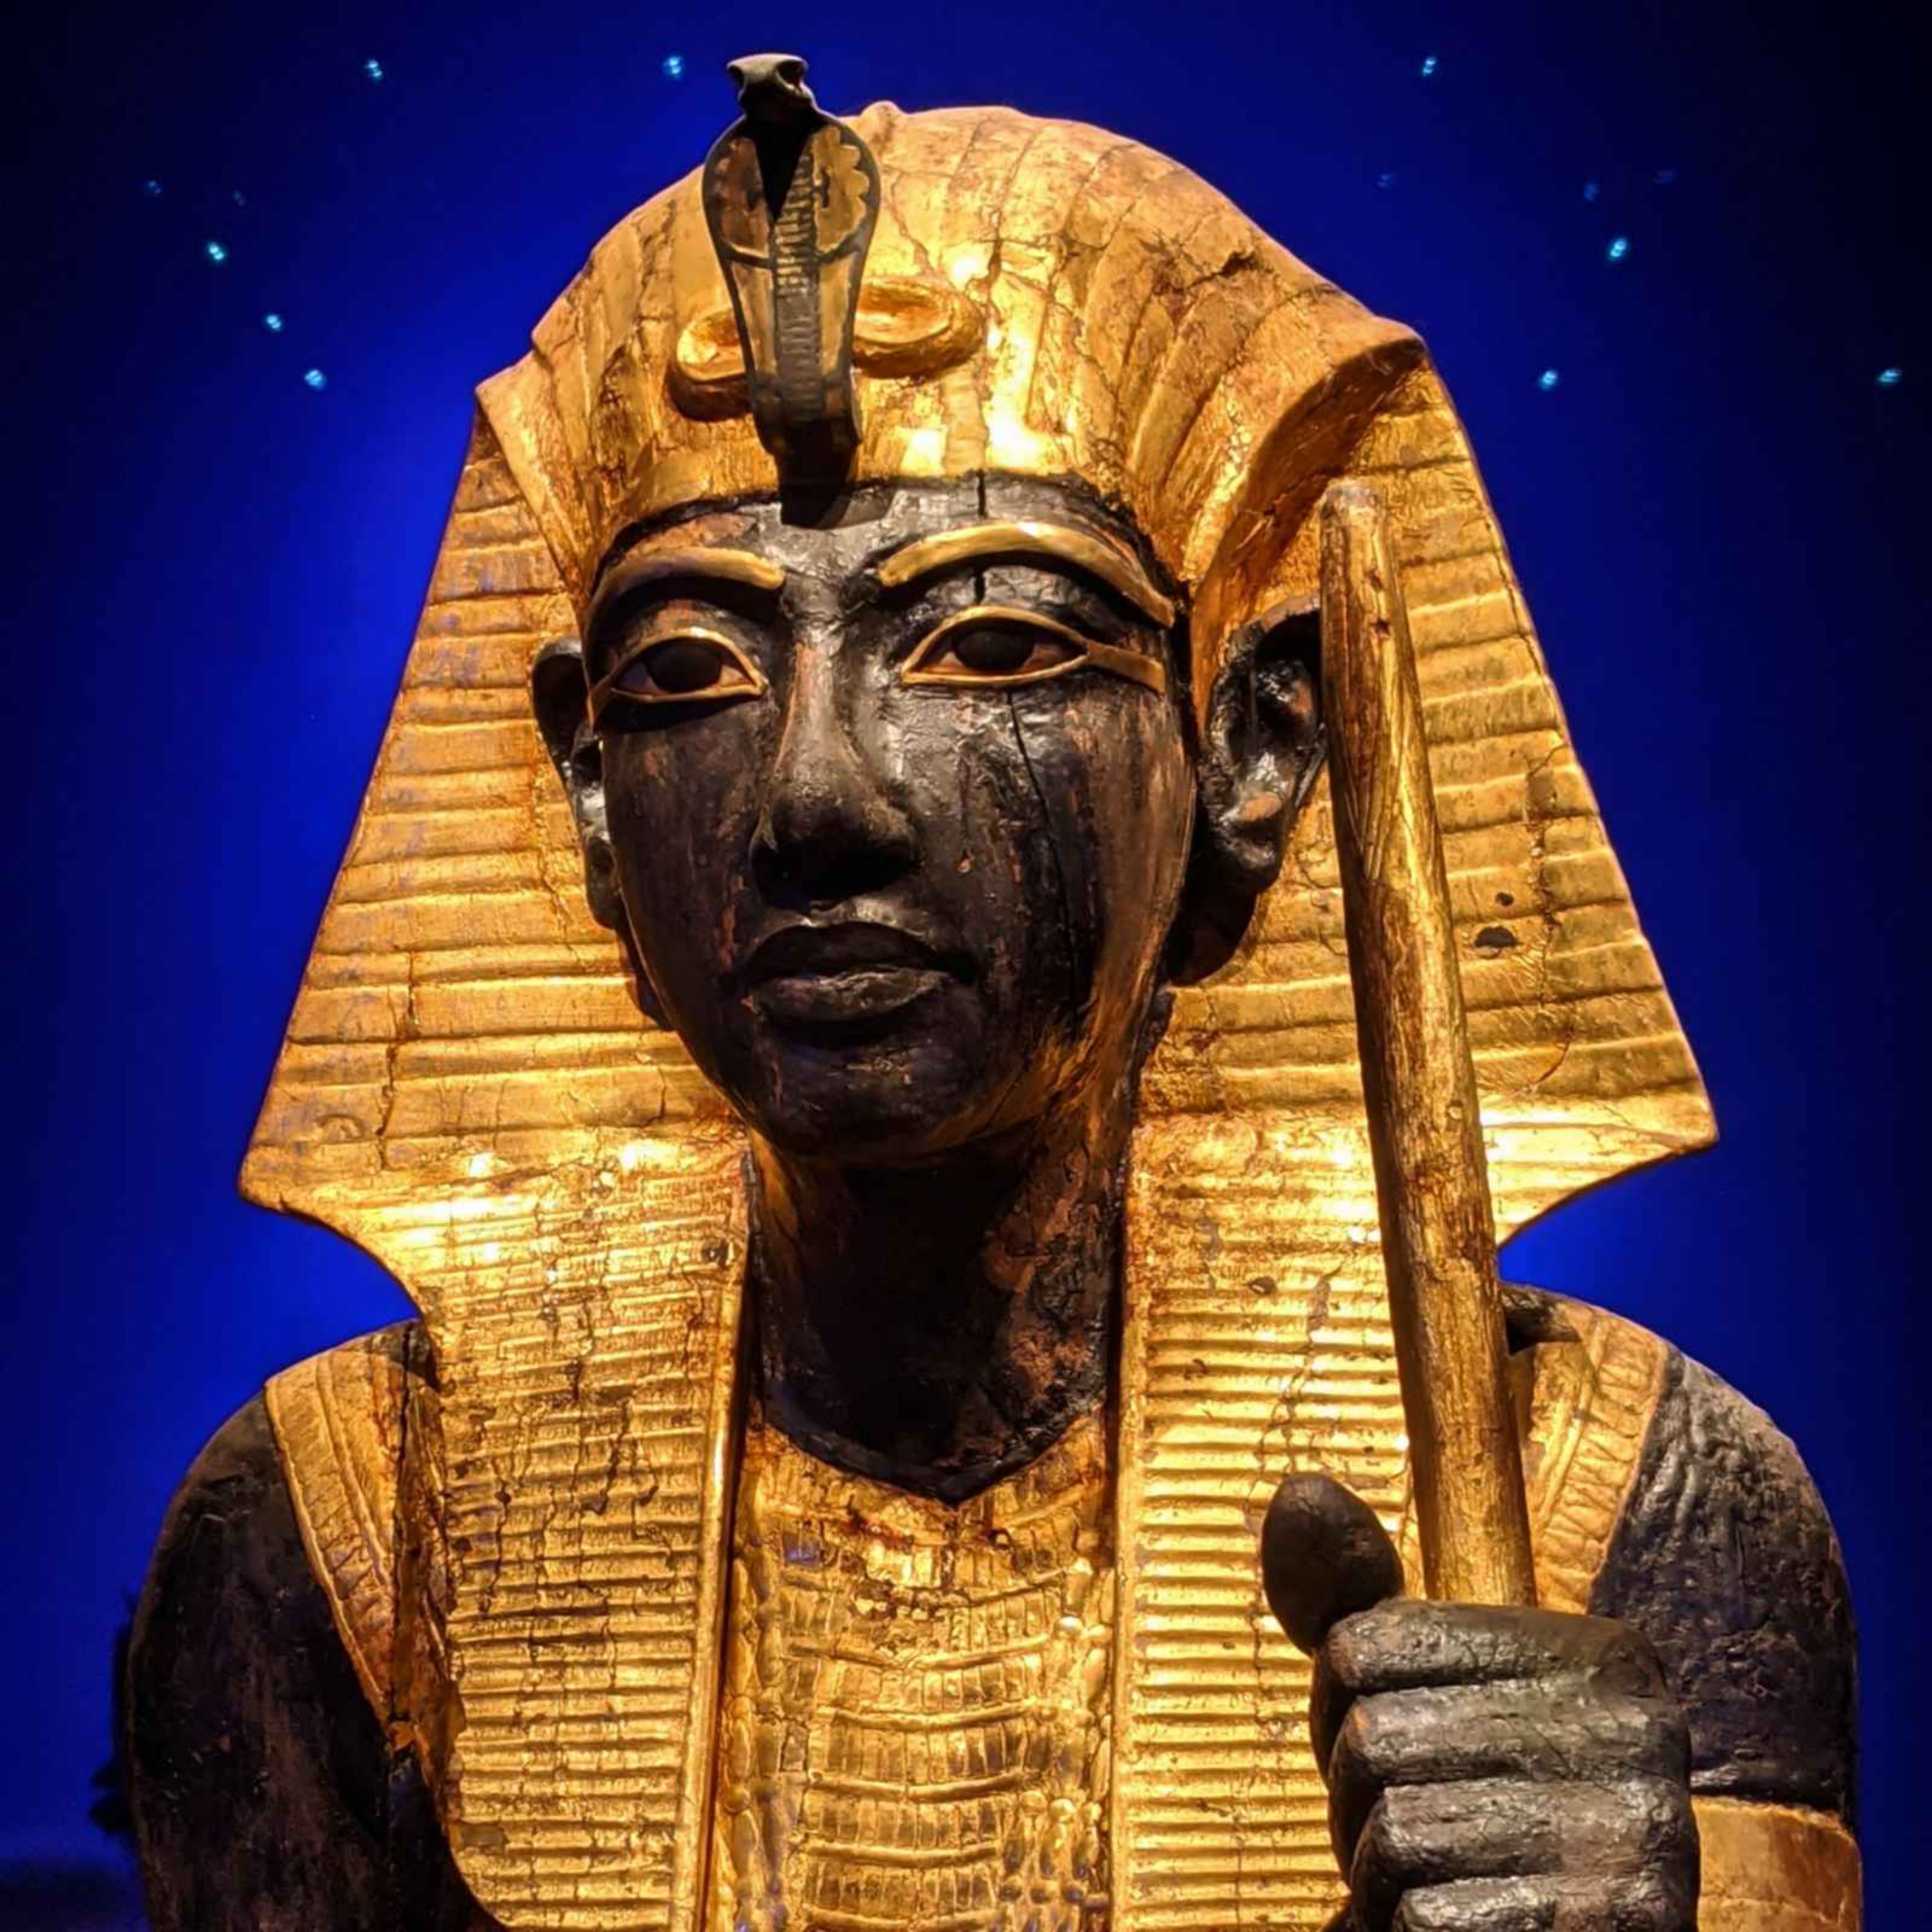 153a: The Tomb of Tutankhamun (Part 1)